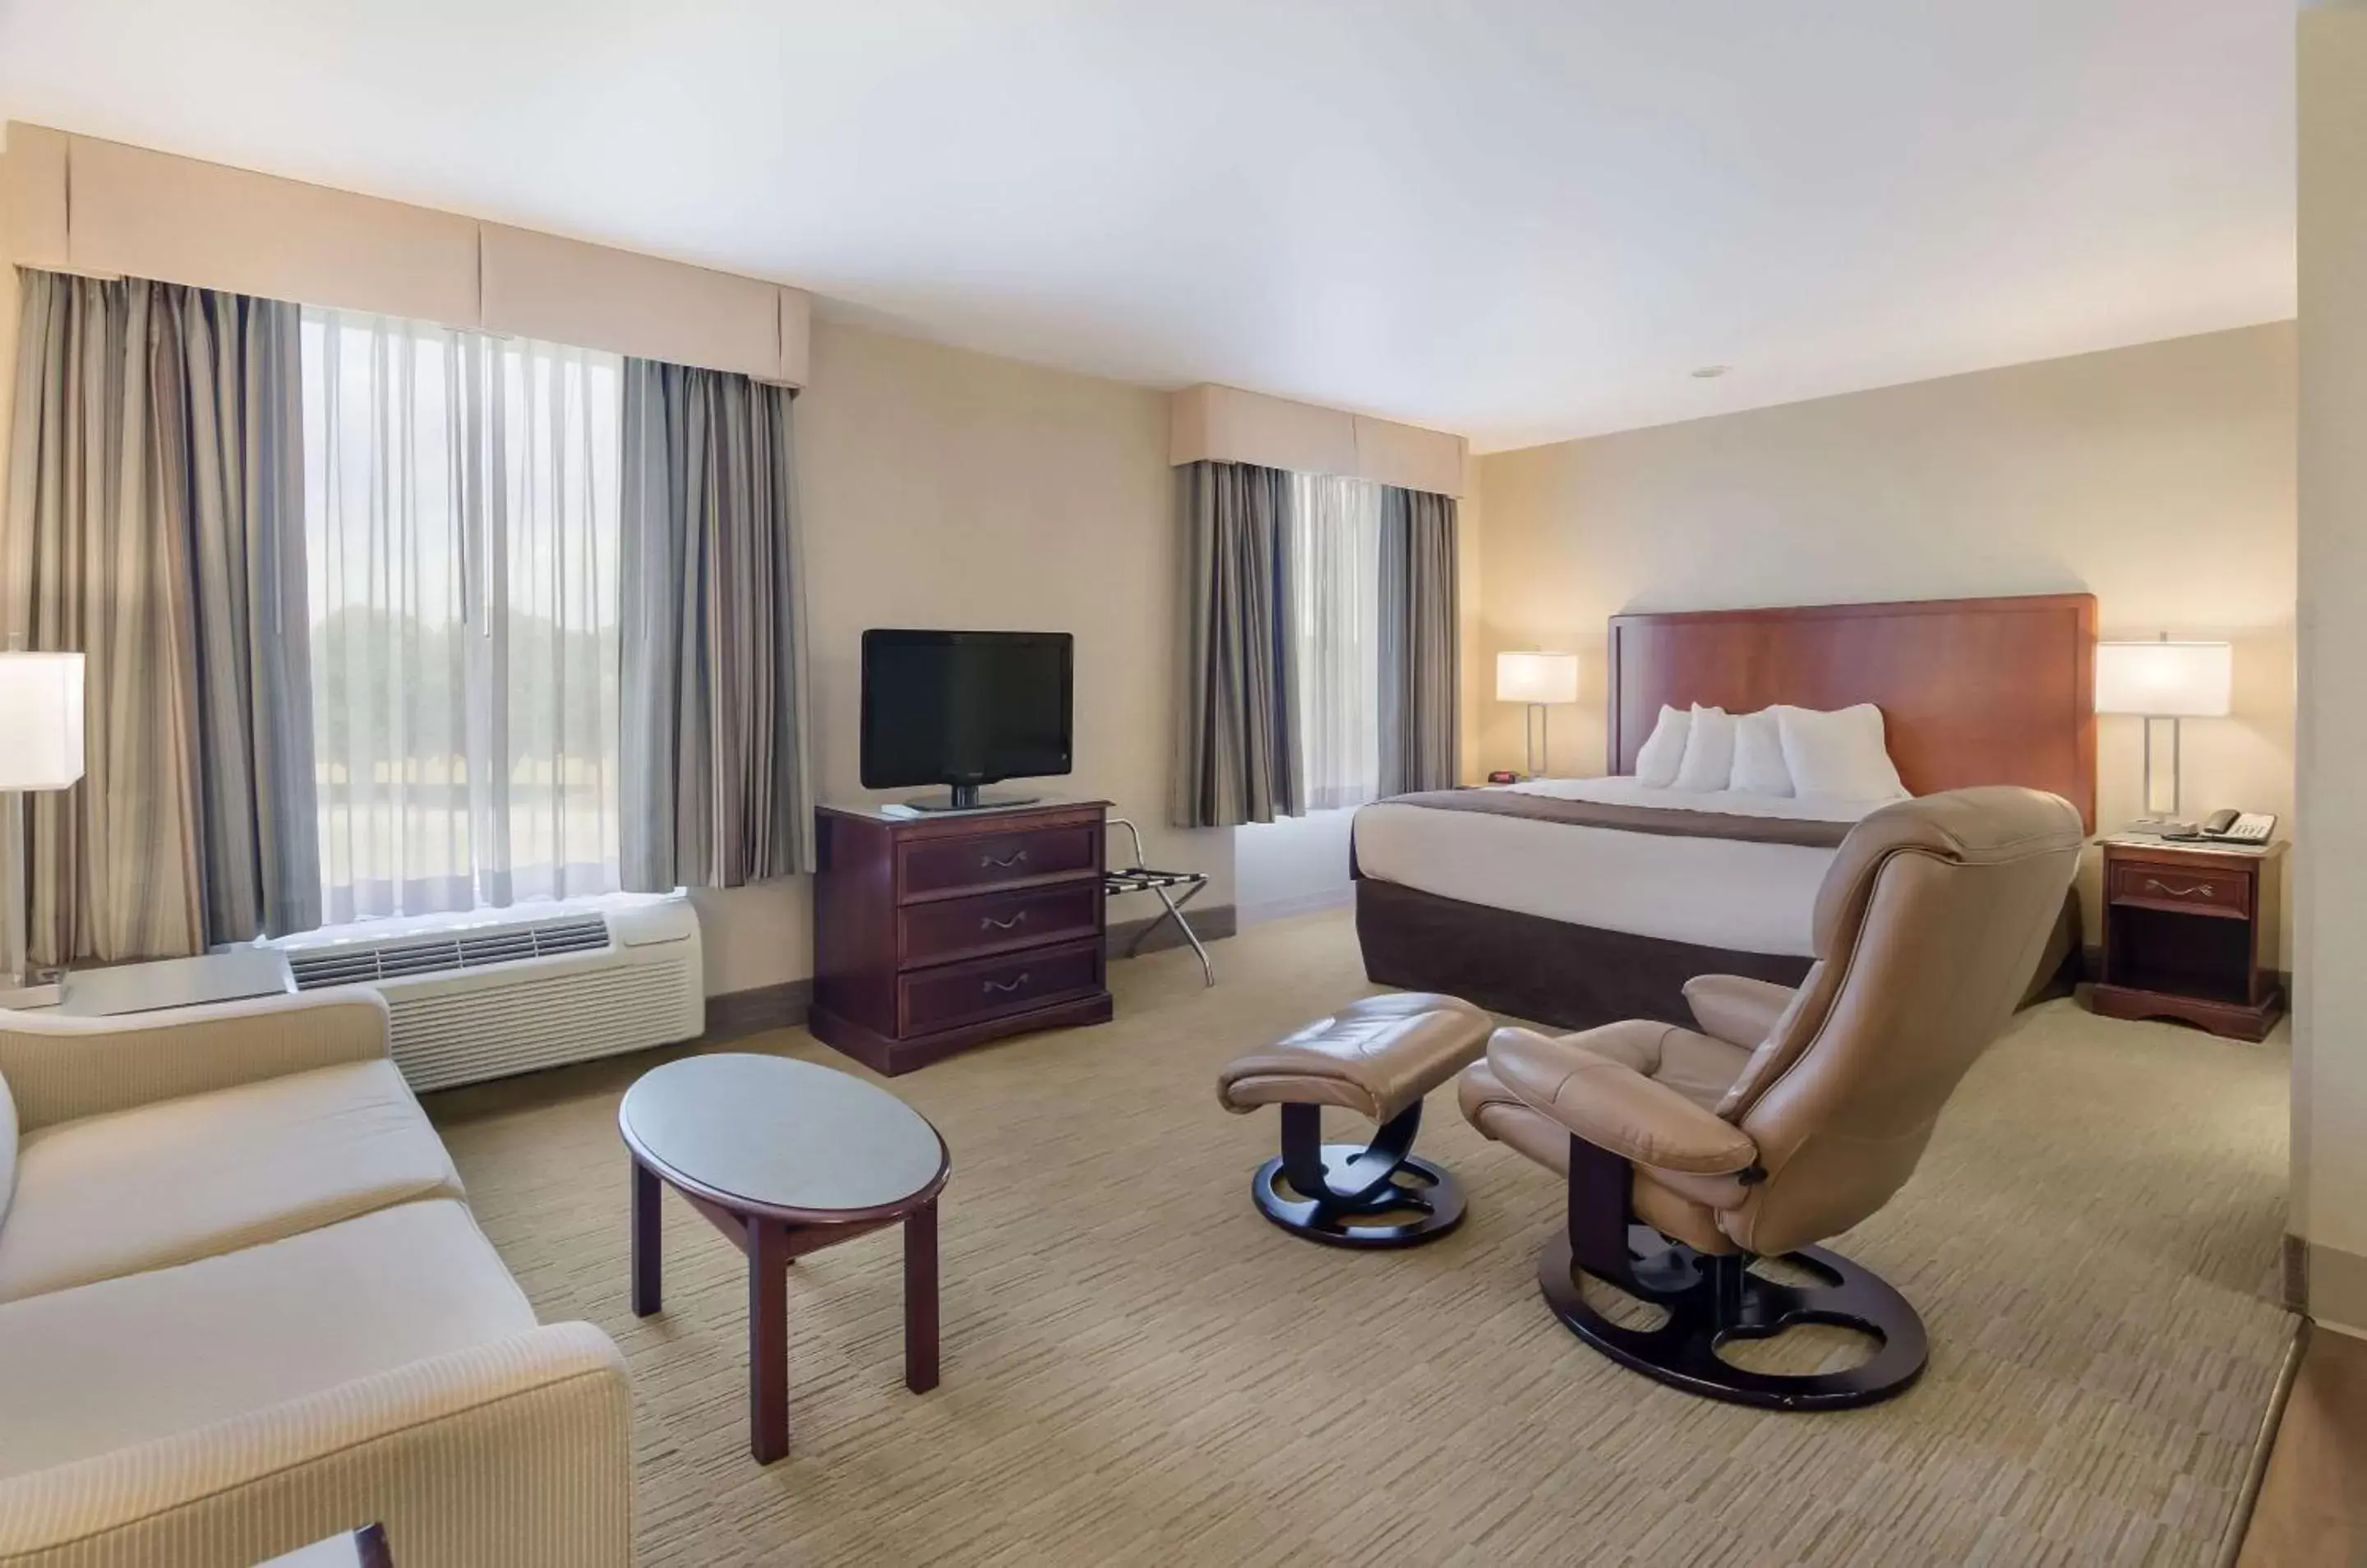 Bedroom in MainStay Suites Airport